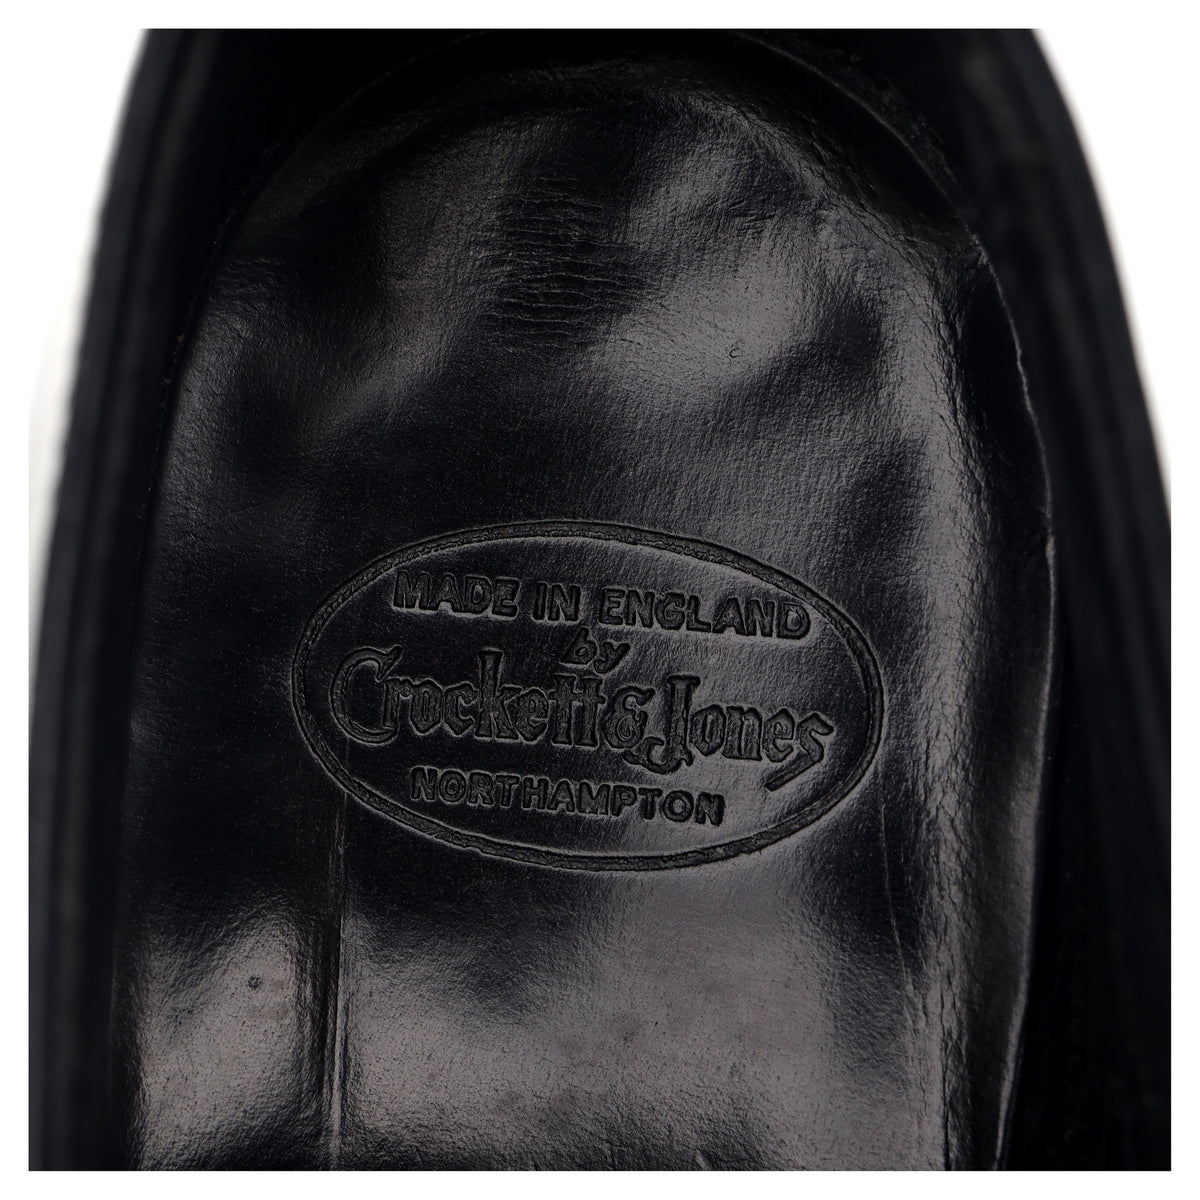 &#39;Belgrave&#39; Black Leather Oxford UK 6 E